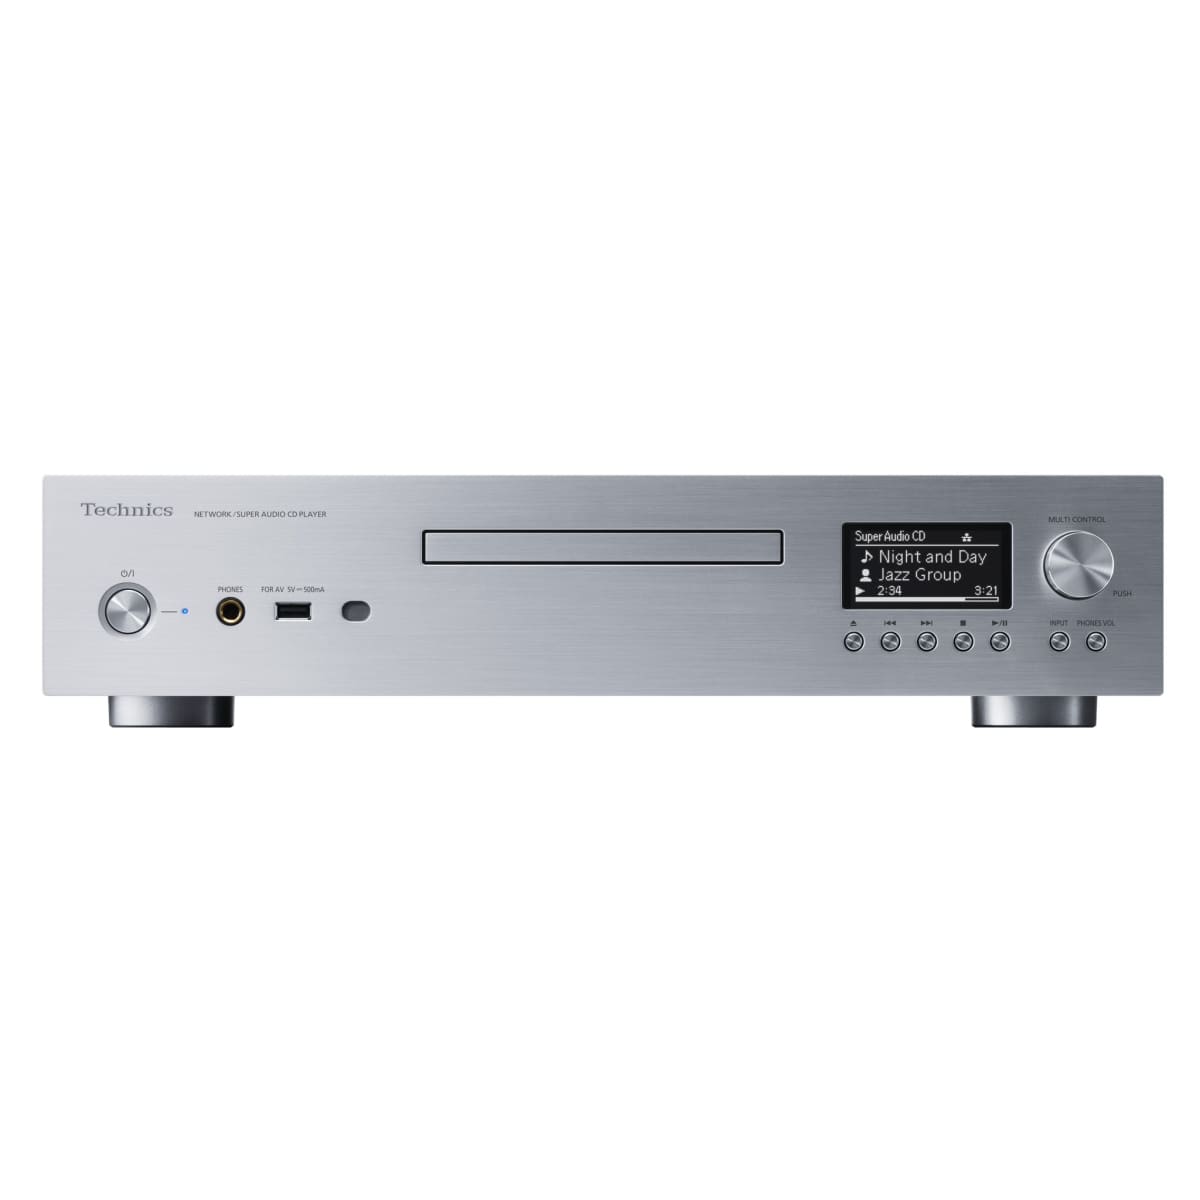 Network / Super Audio Cd Player - Sl-G700M2 Silver + Digital